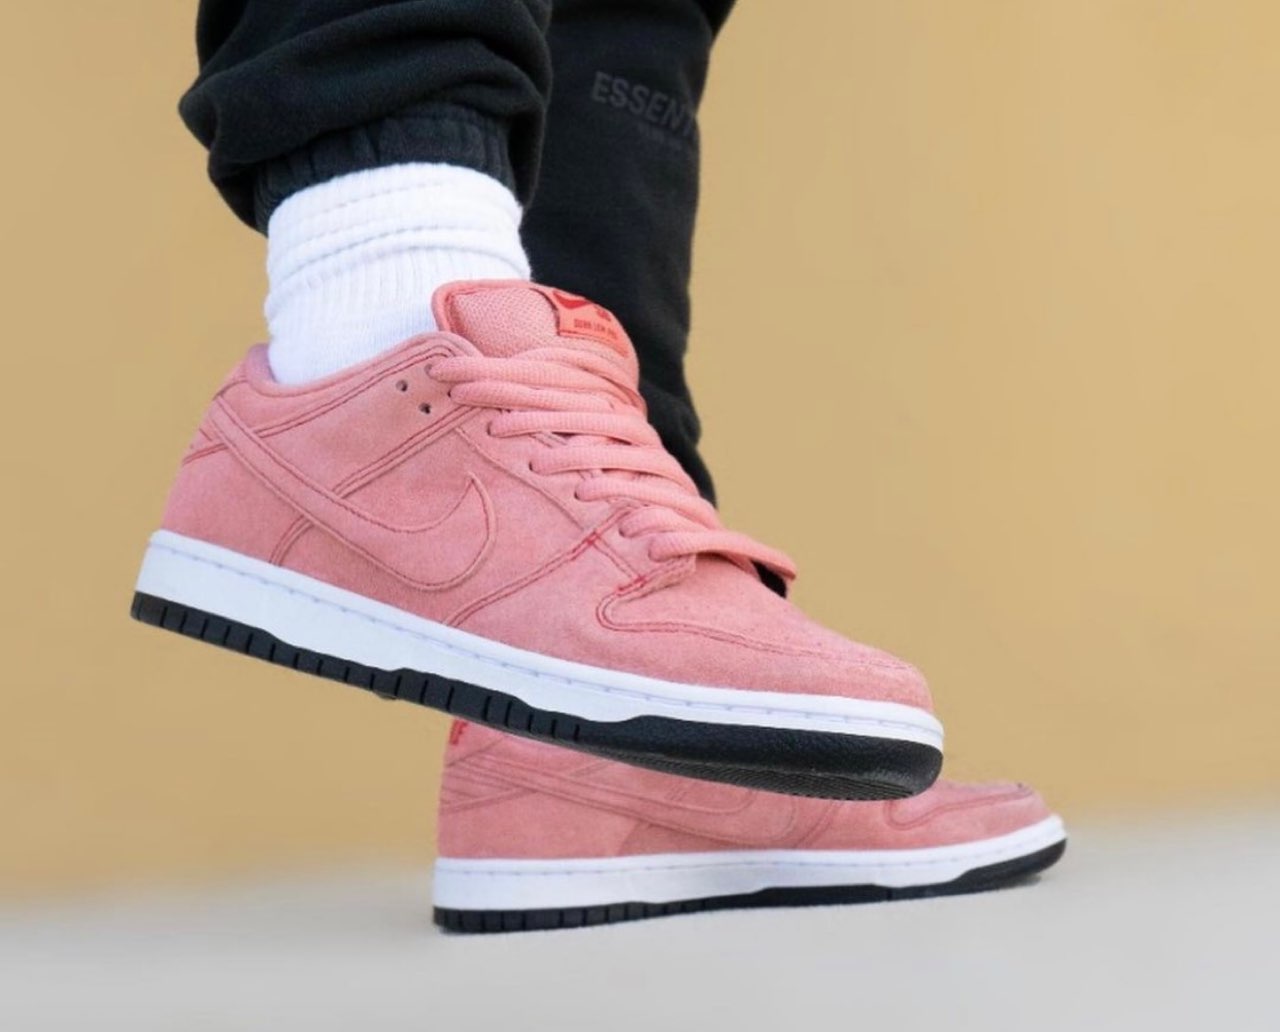 Nike SB】Dunk Low Pro PRM “Pink Pig”が国内2021年2月1日/2月17日に